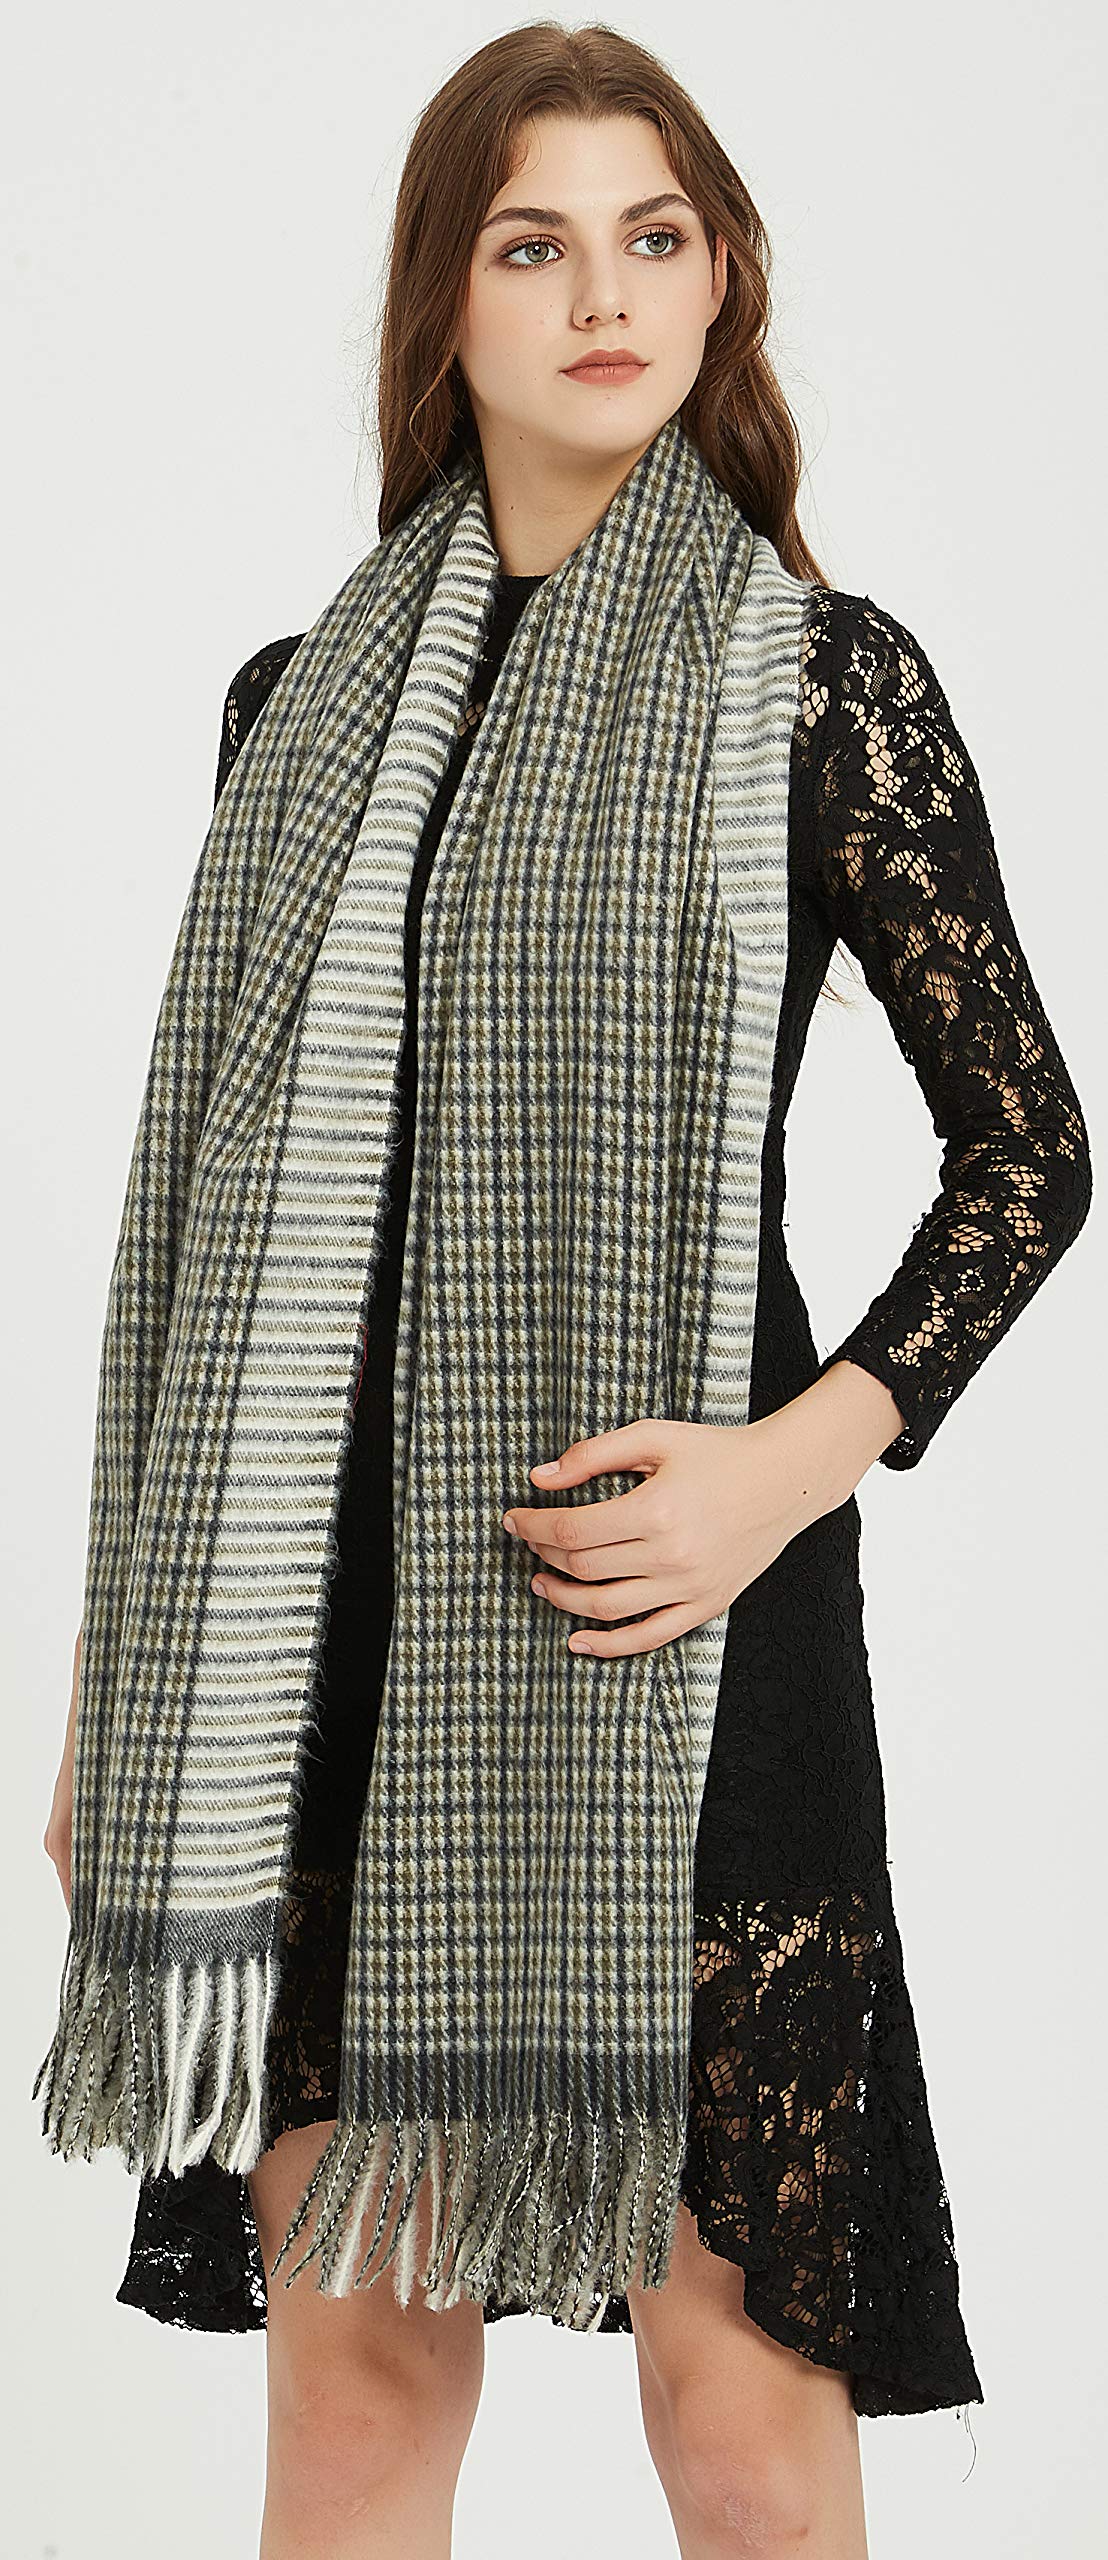 Premium Soft Elegant Tartan Cashmere Blanket Scarf Shawl